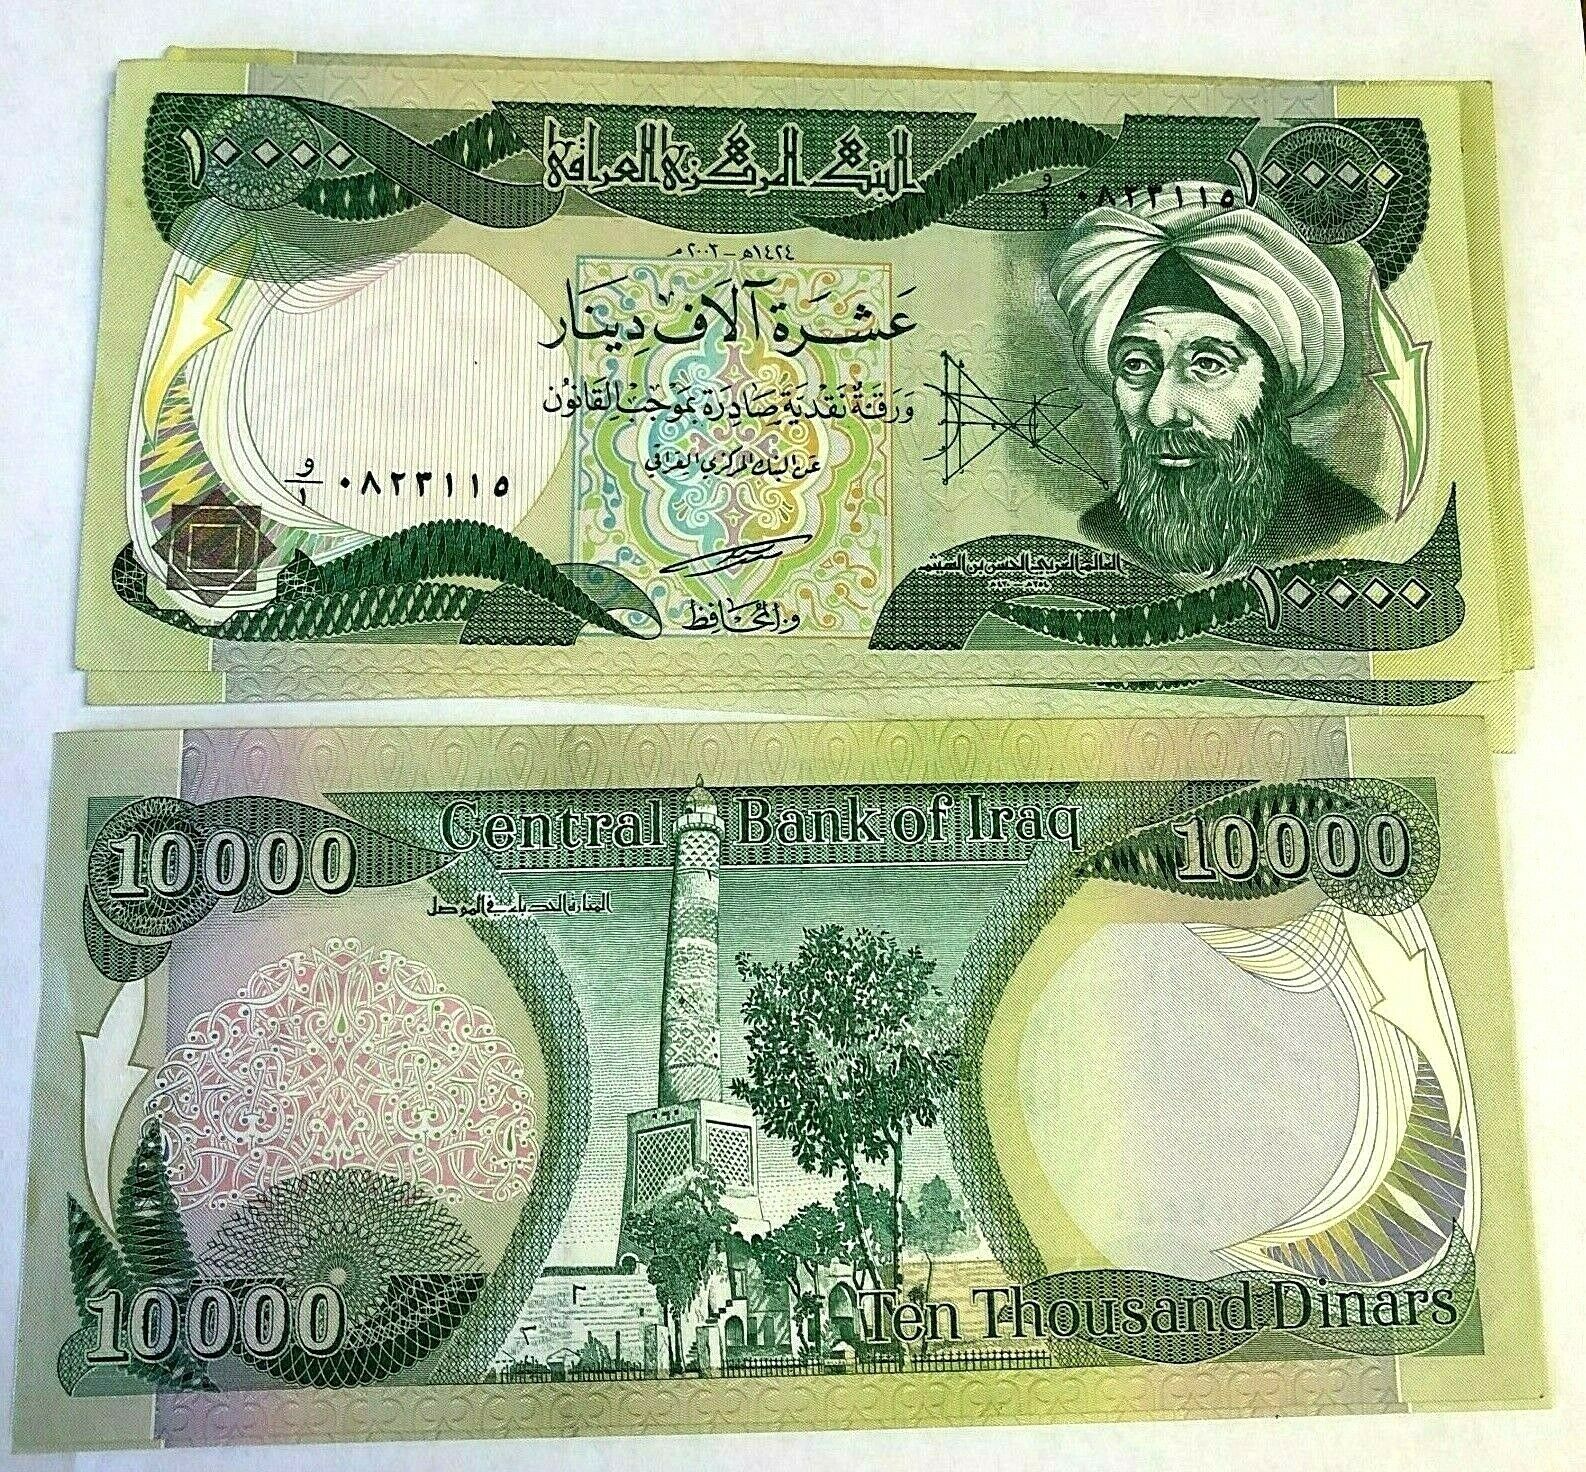 10000 IRAQI DINAR, Central Bank of Iraq 10,000 Dinars Note, IQD, Free Ship